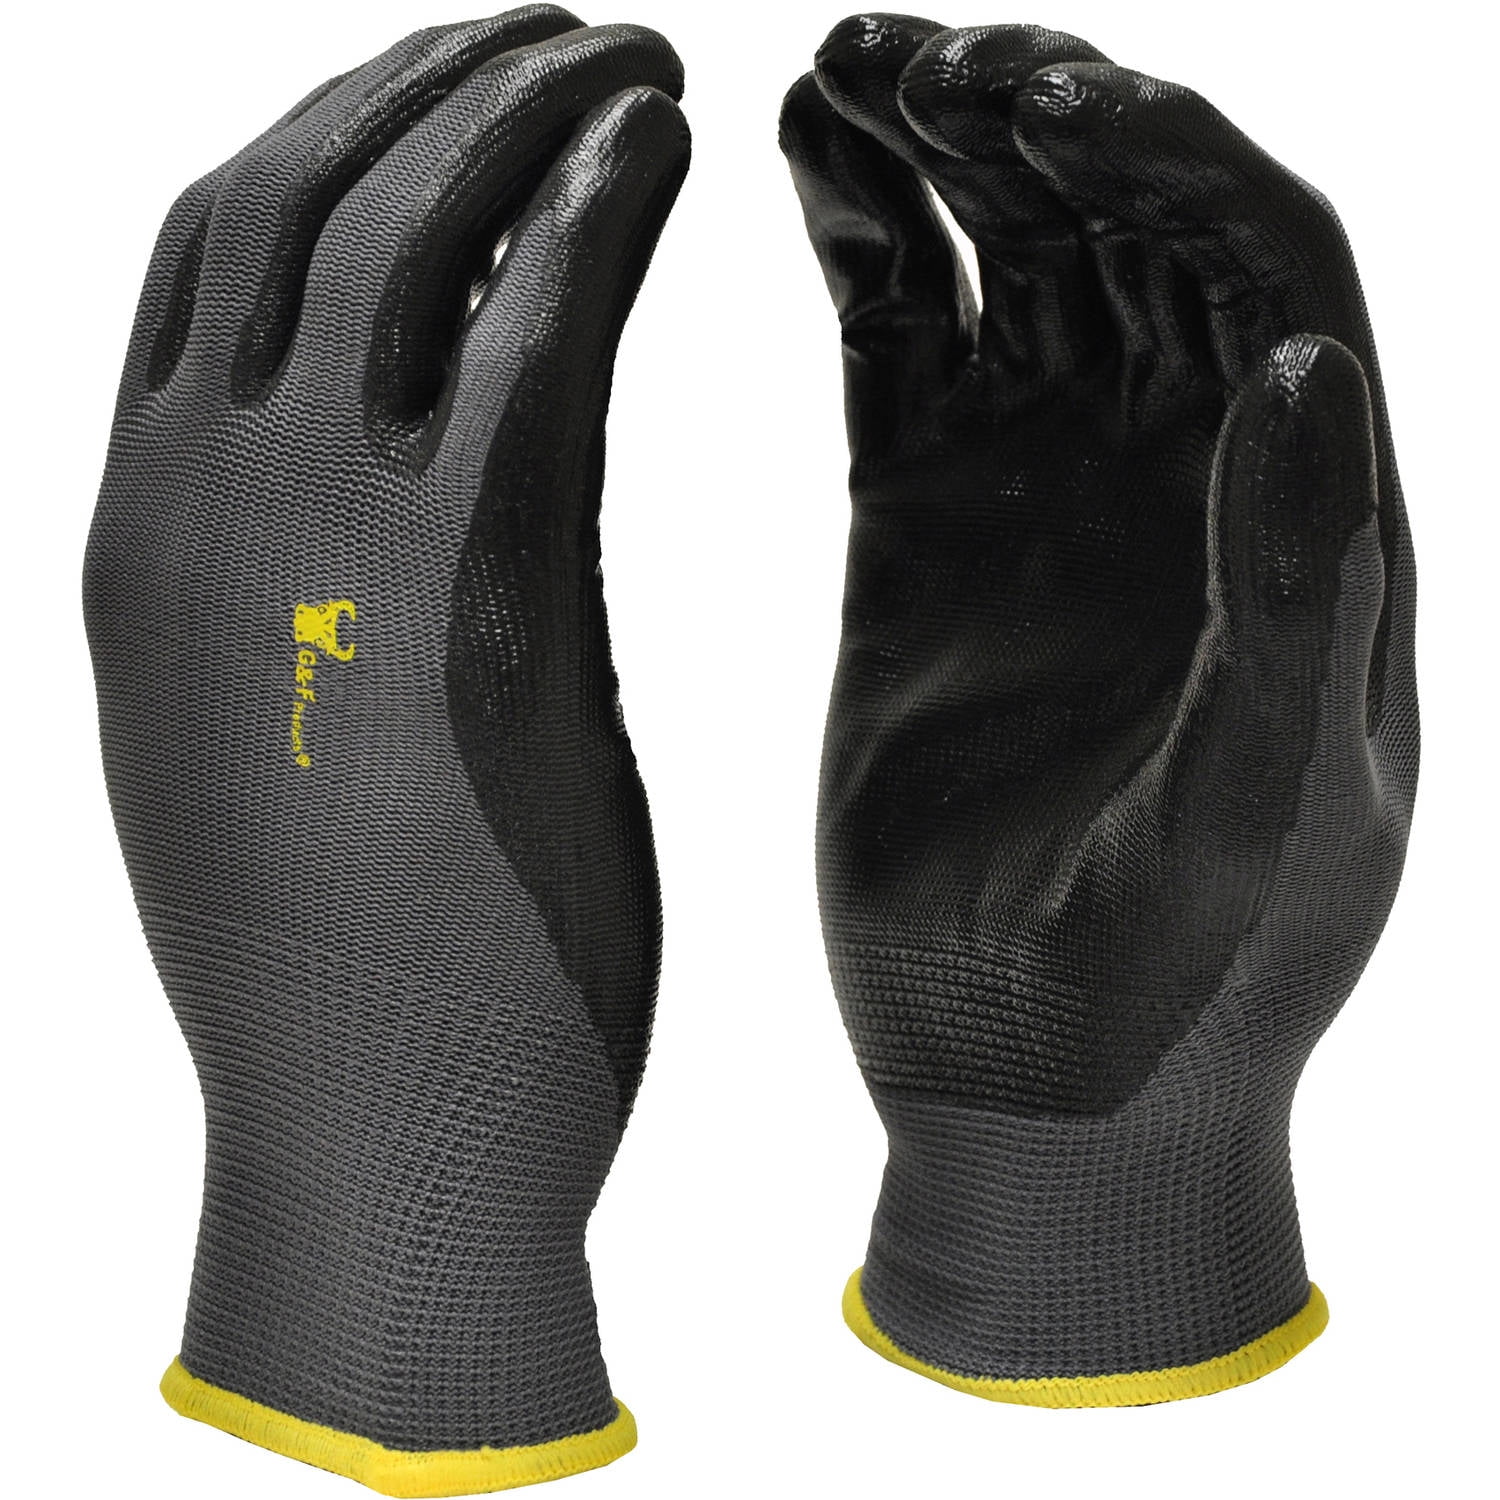 Size 2XL (11) Nitrile Coated Nylon/Nitrile Work Gloves, Men's